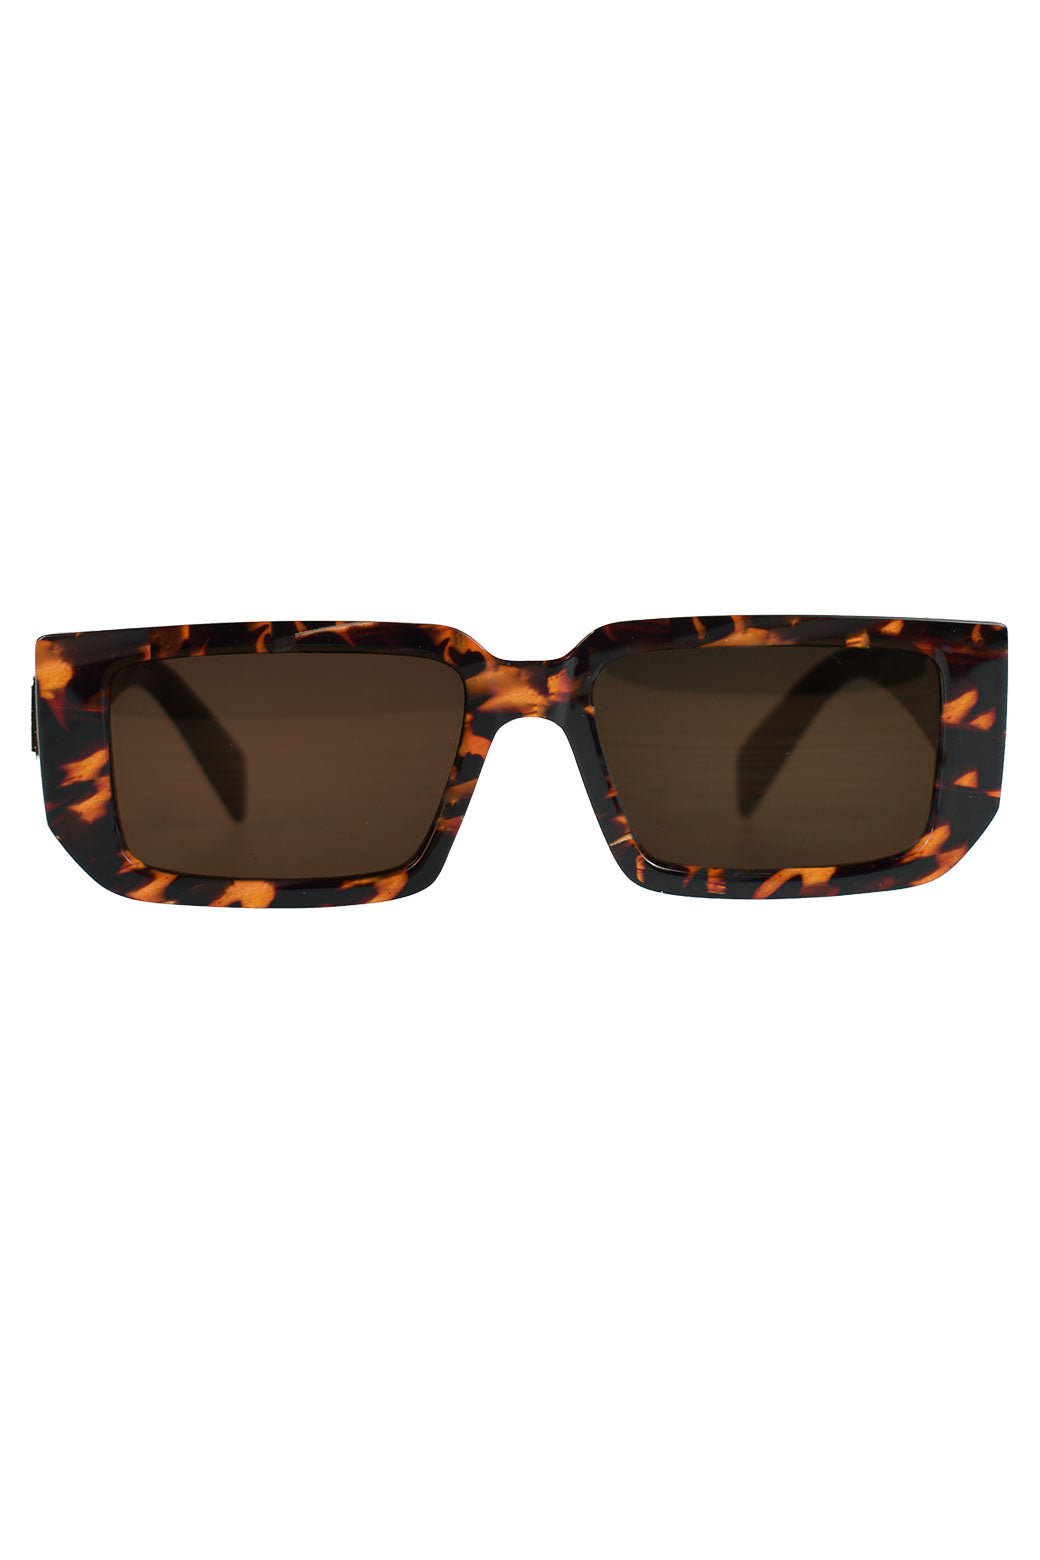 FINAL SALE Peta + Jain Evans Tortoiseshell Sunglasses